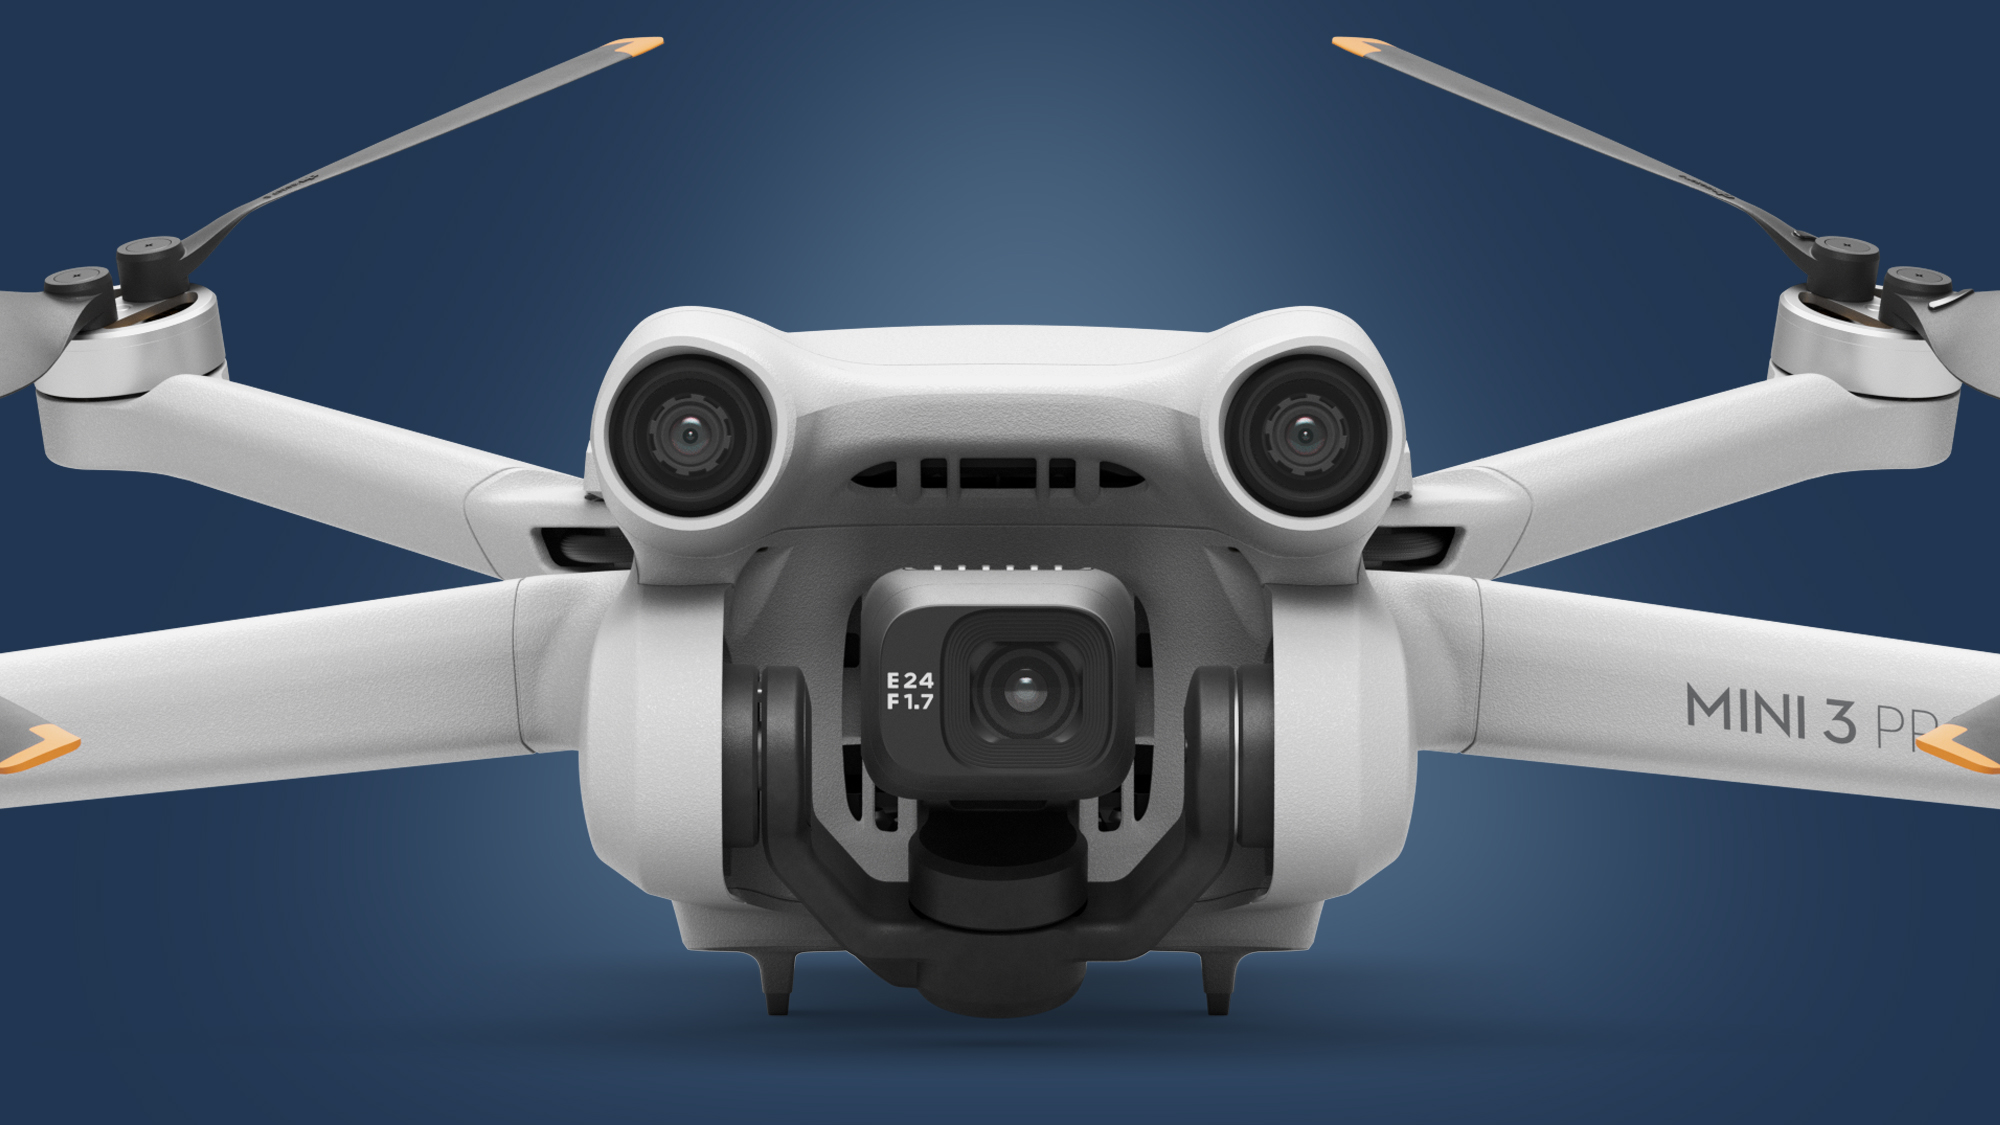 The DJI Mini 3 Pro drone on a blue background